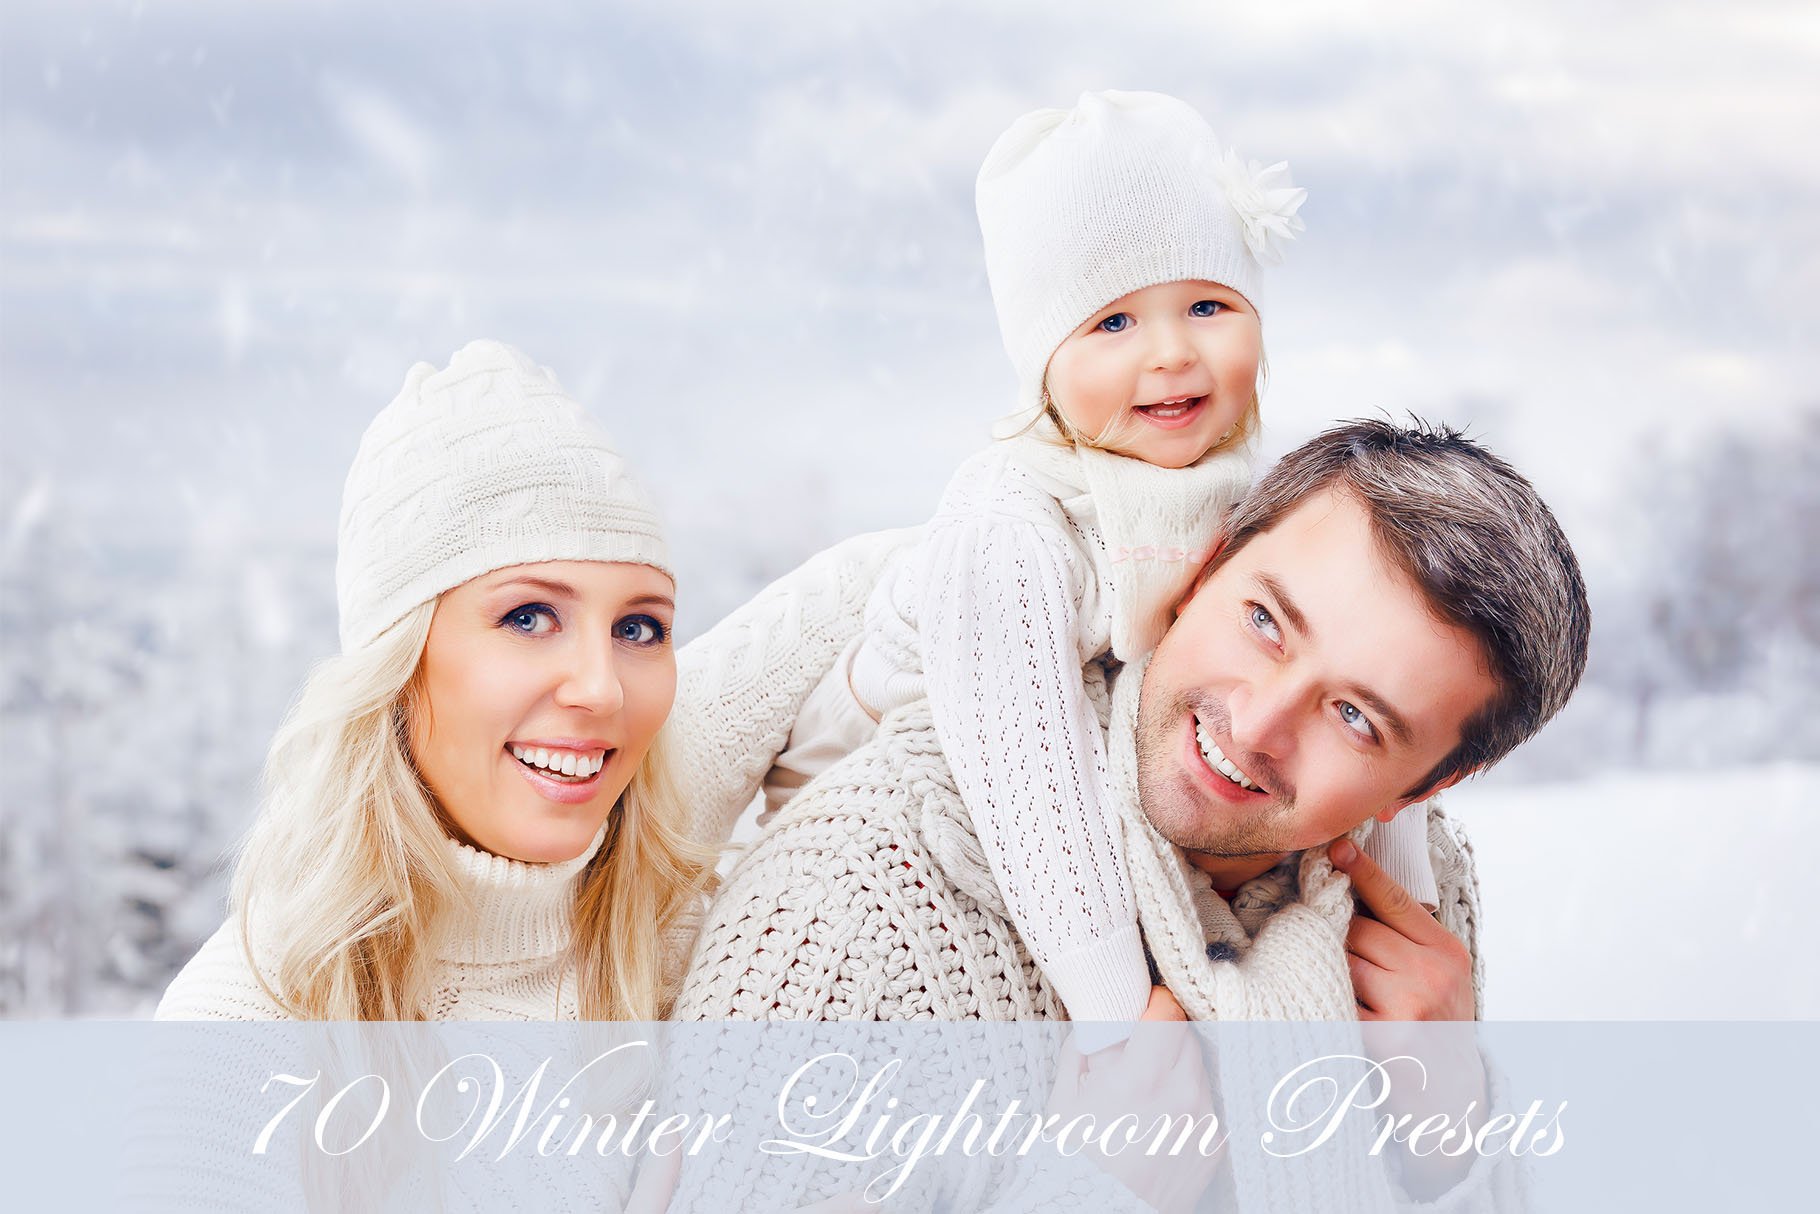 70 Winter Lightroom Presetscover image.